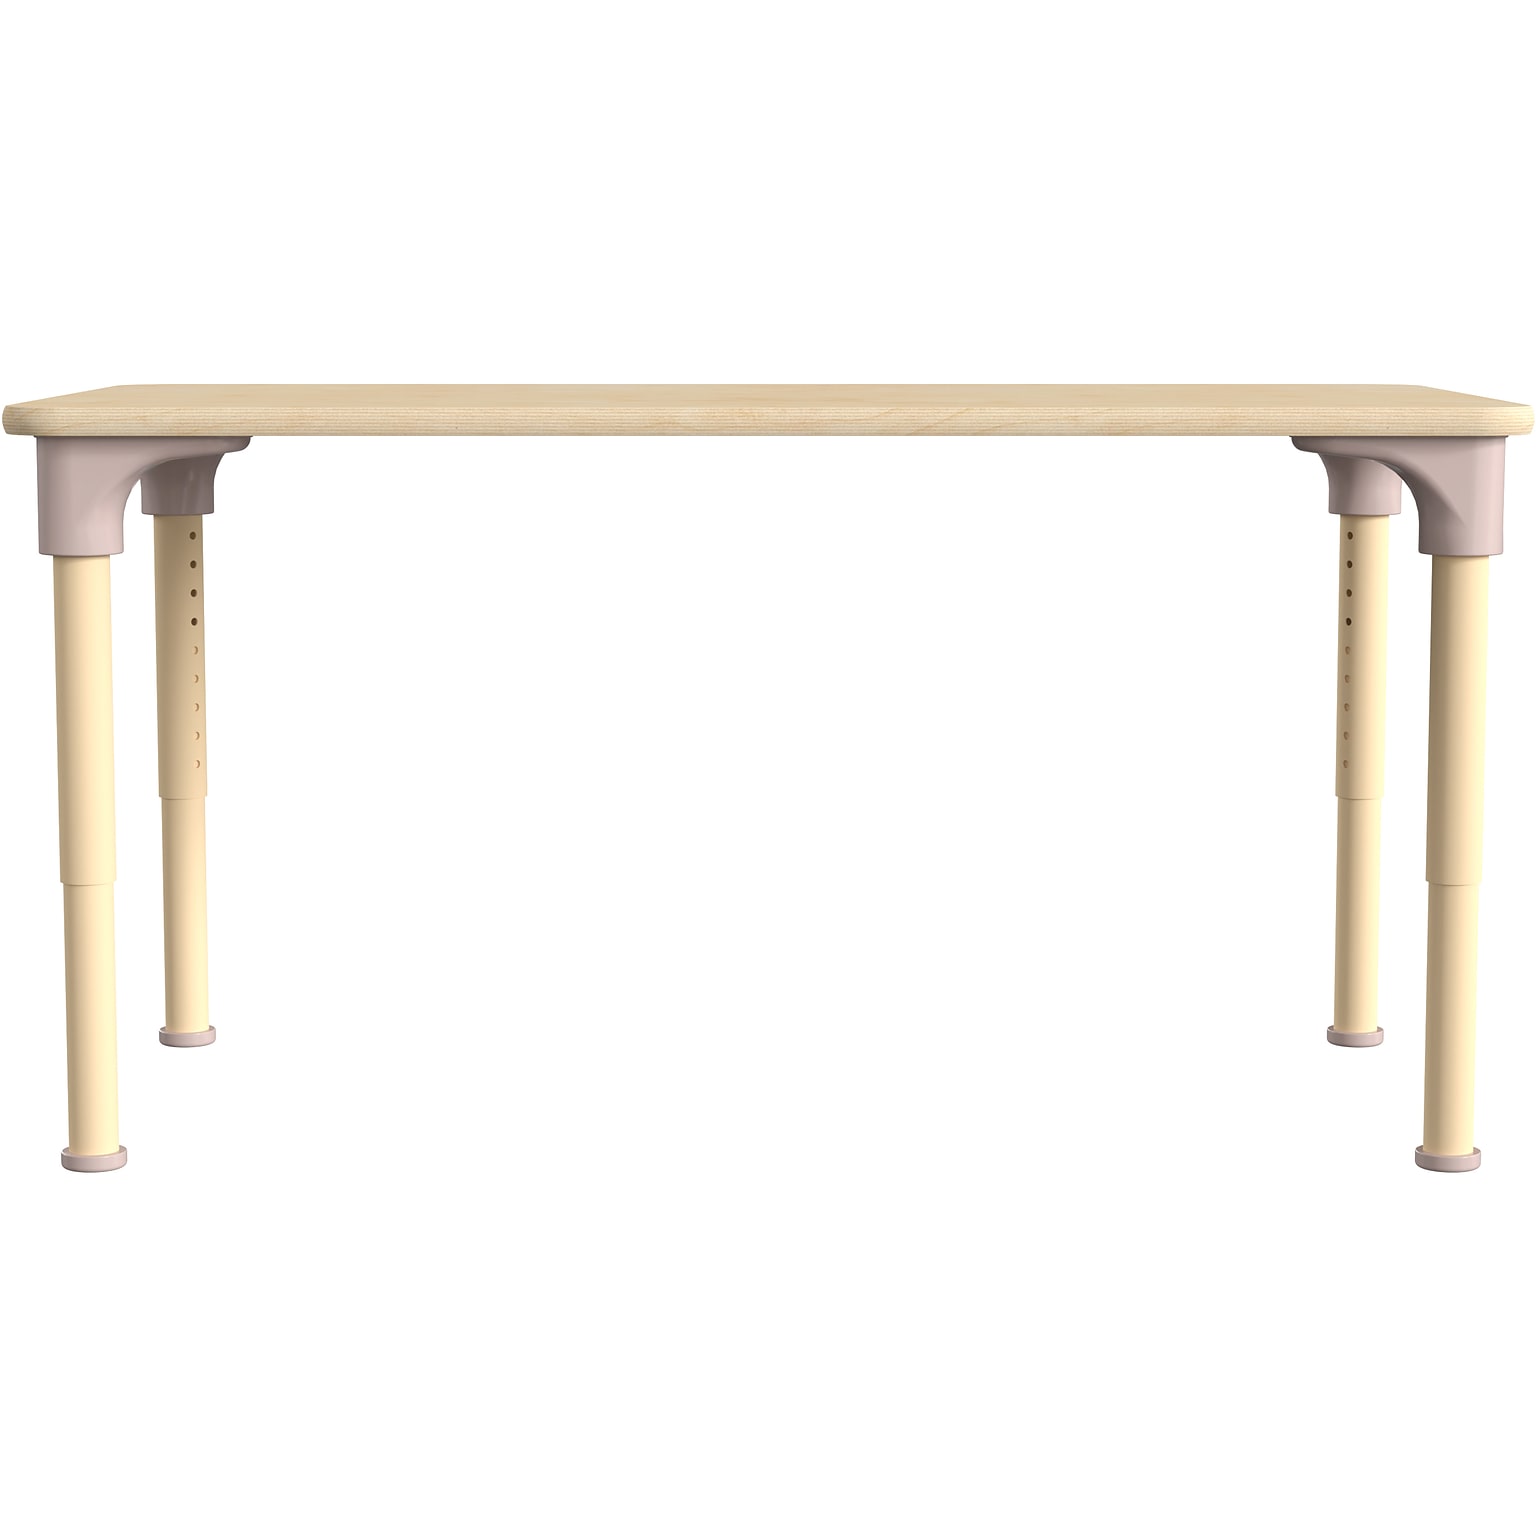 Flash Furniture Bright Beginnings Hercules Rectangular Table, 47 x 24, Height Adjustable, Beech (MK-ME088025-GG)